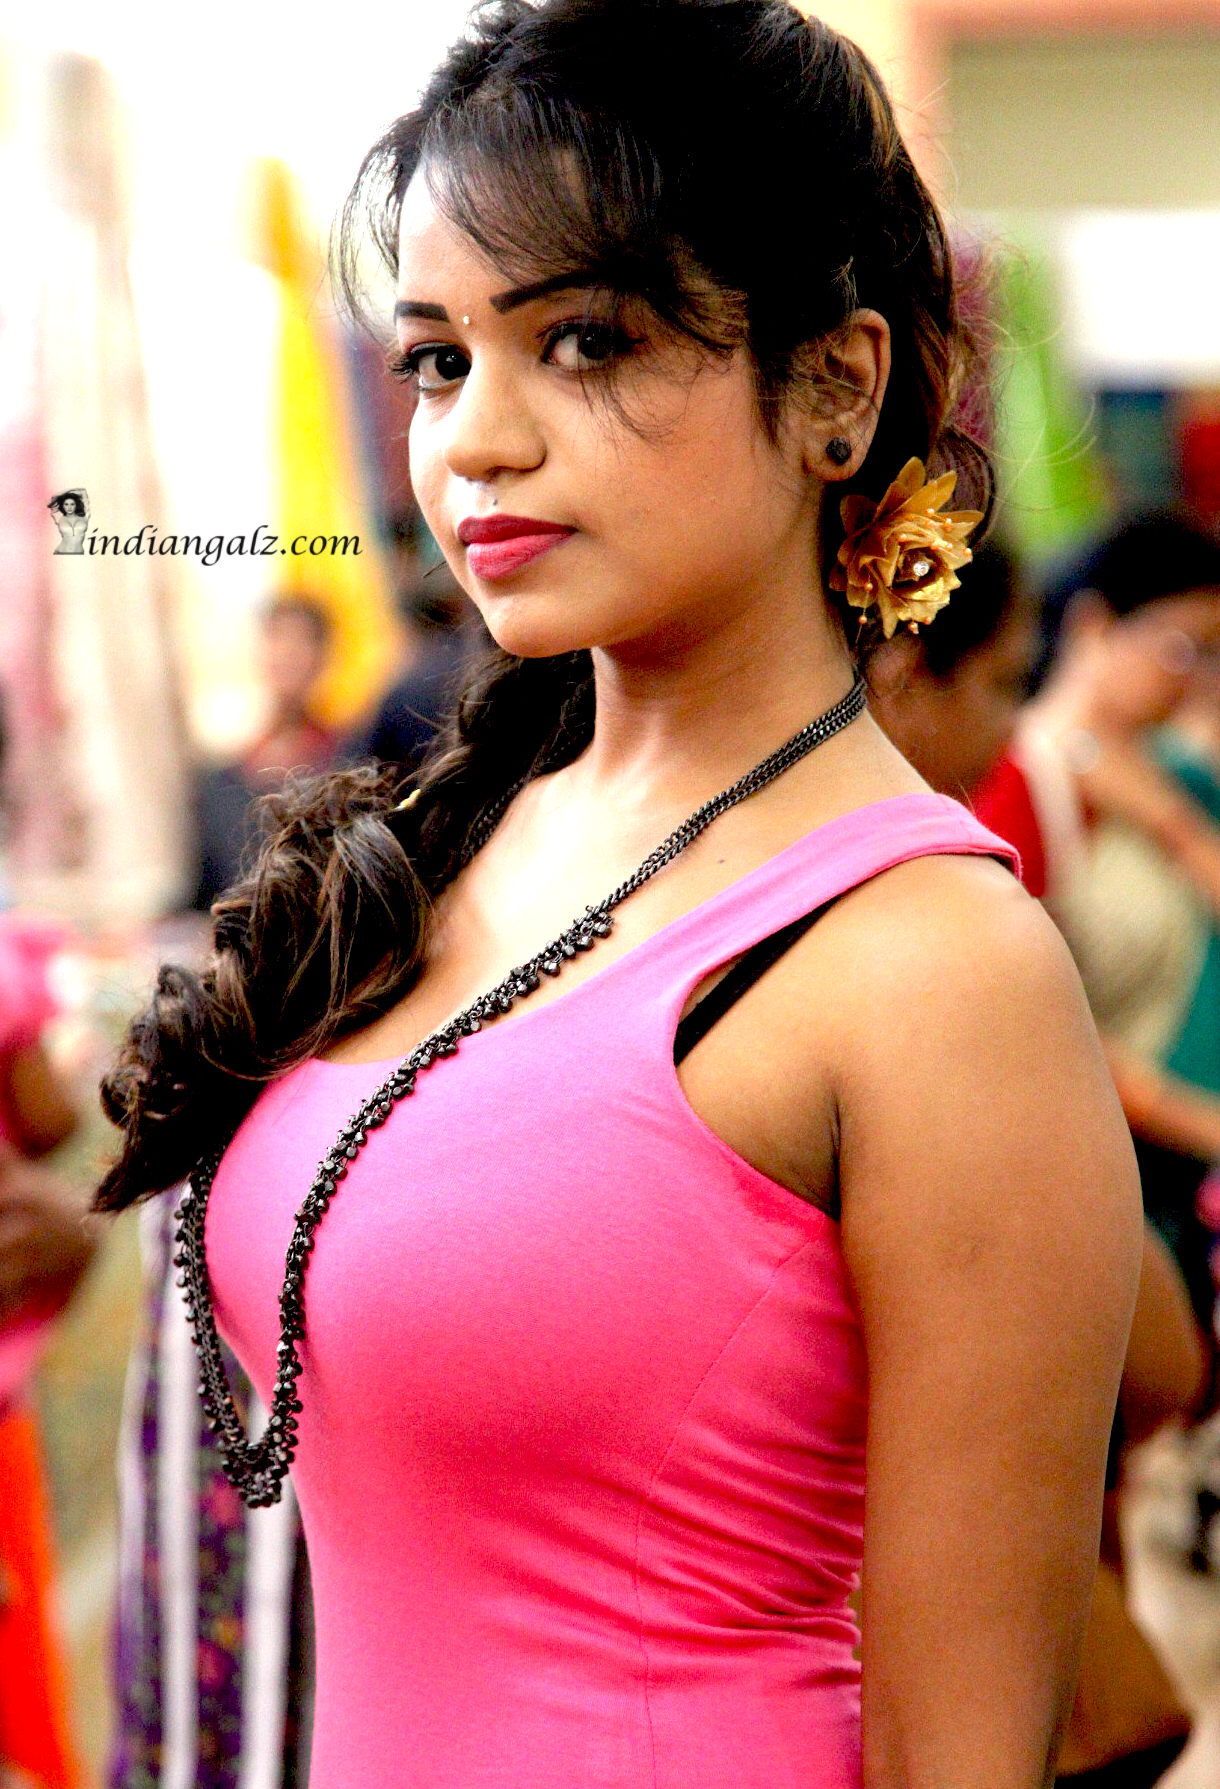 Bhavya Sri – Hot Sexy in a tight pink dress